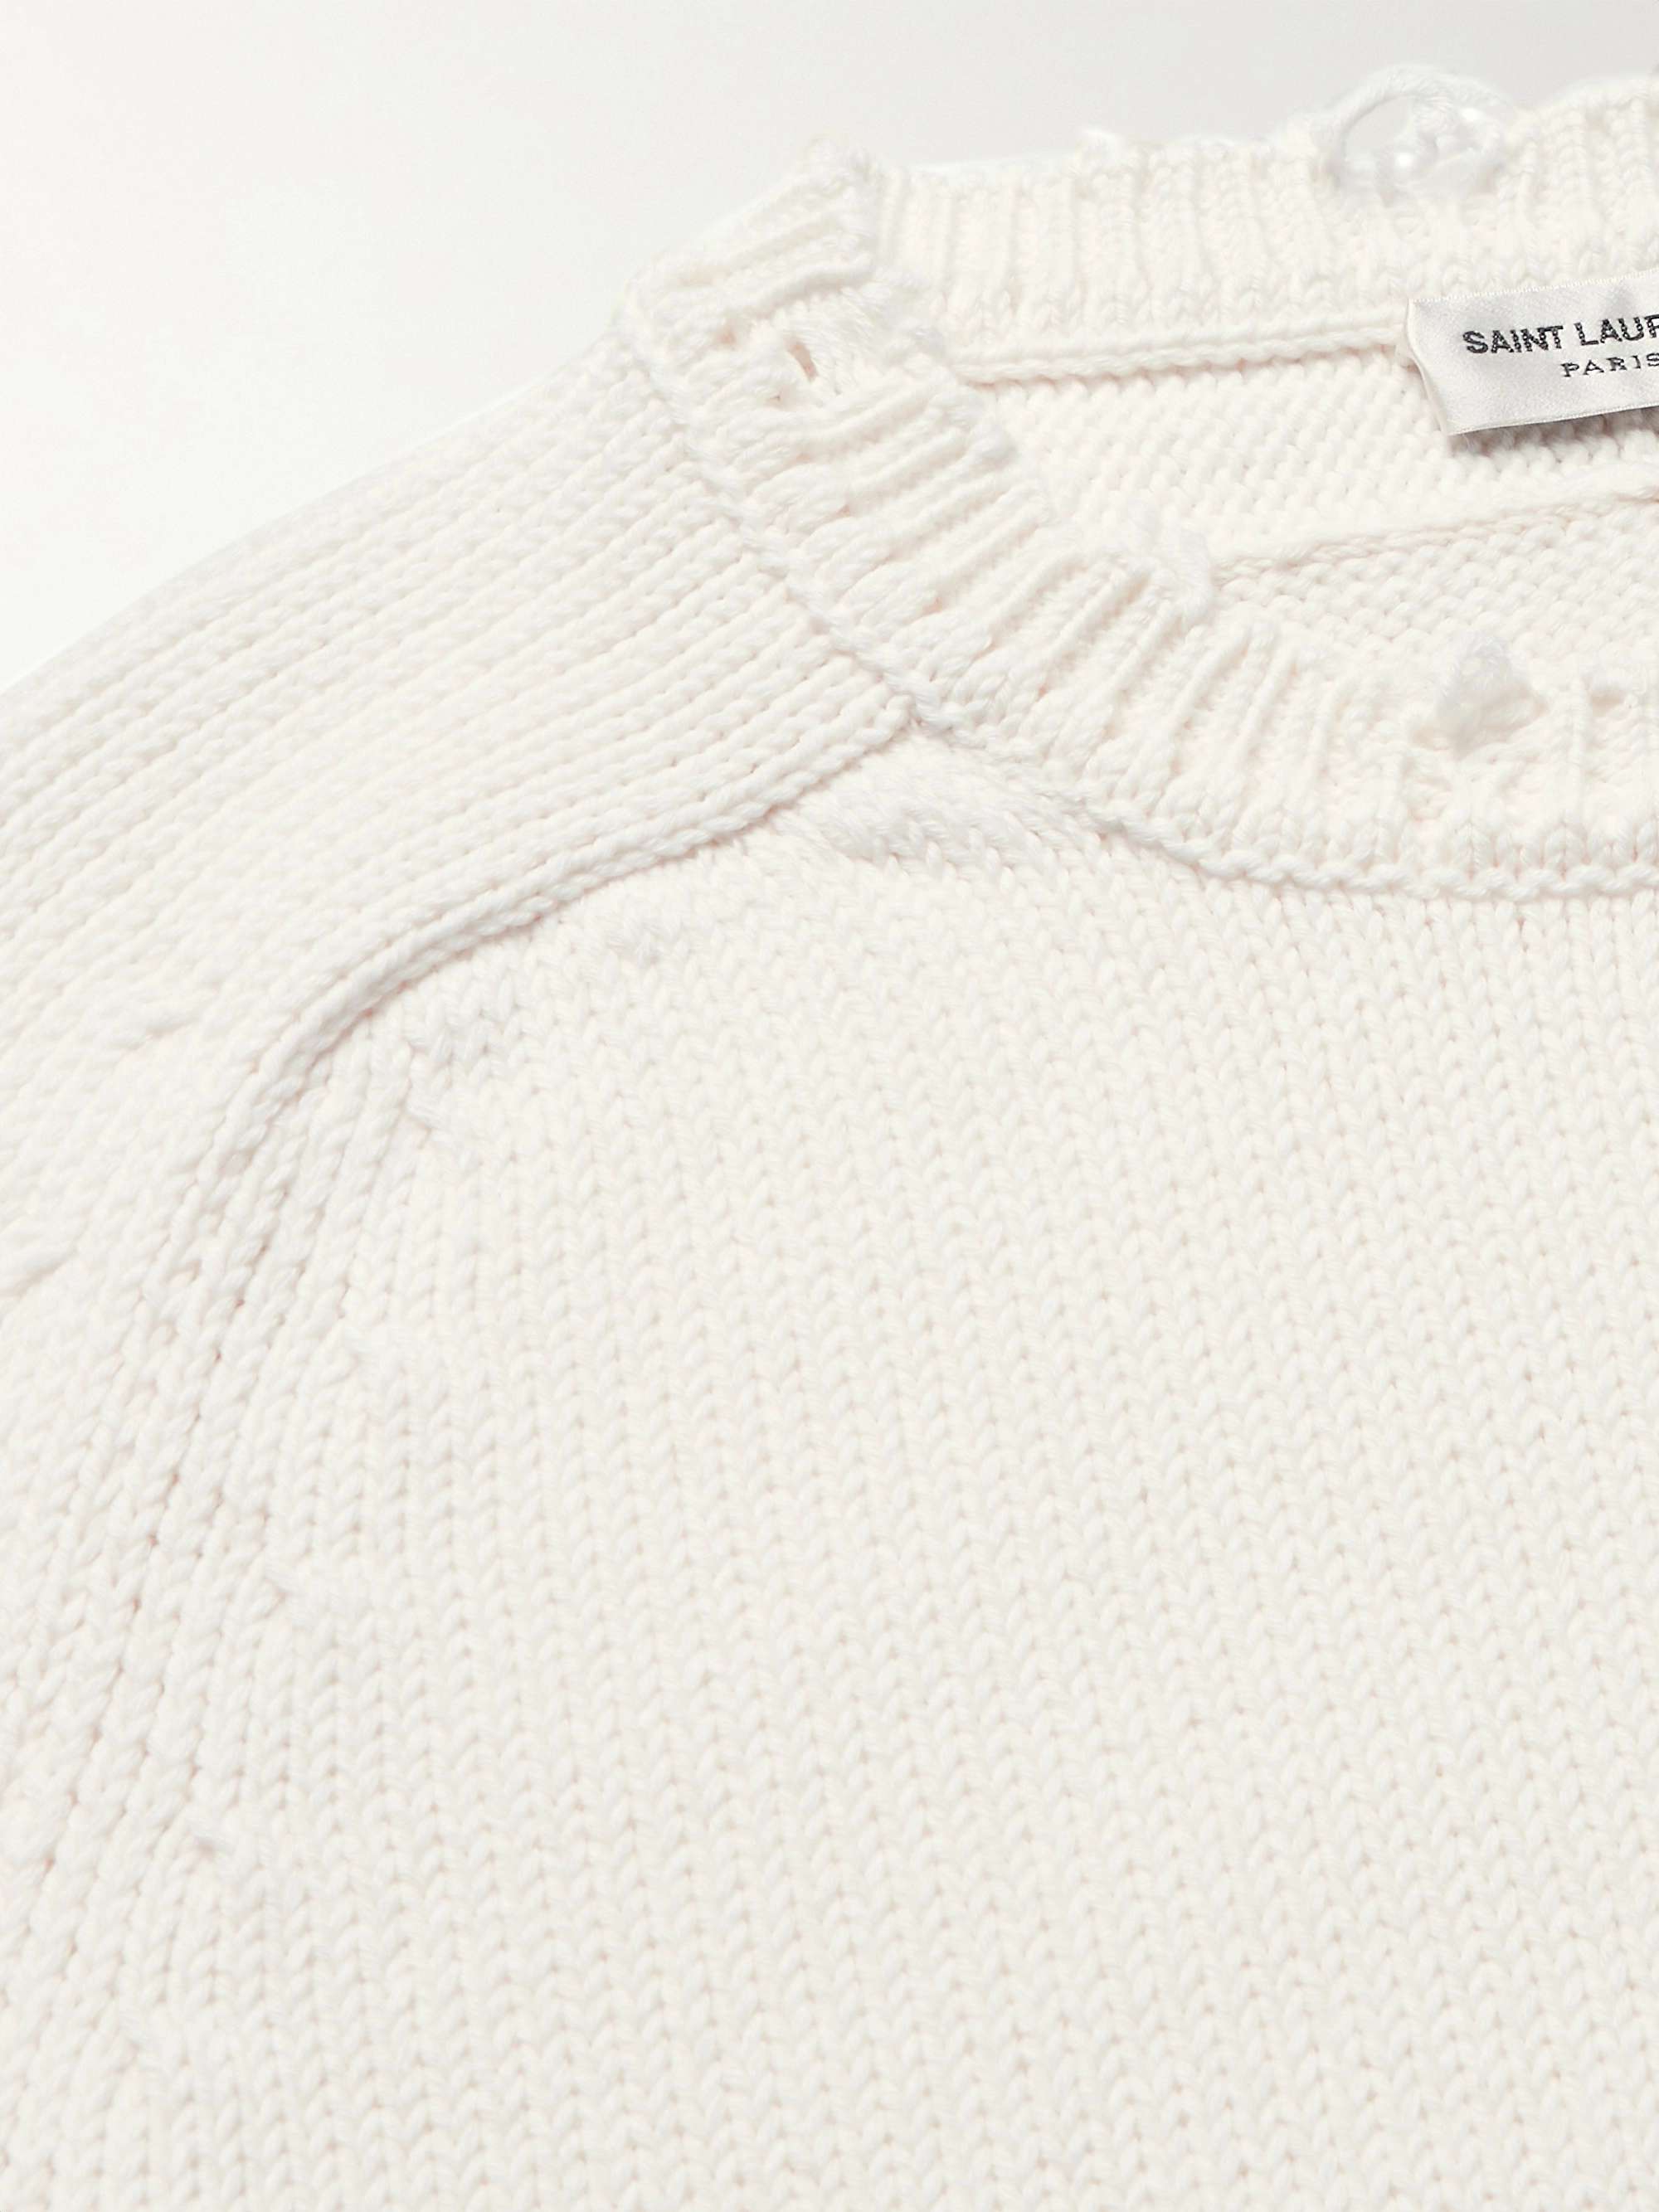 SAINT LAURENT Distressed Cotton Sweater